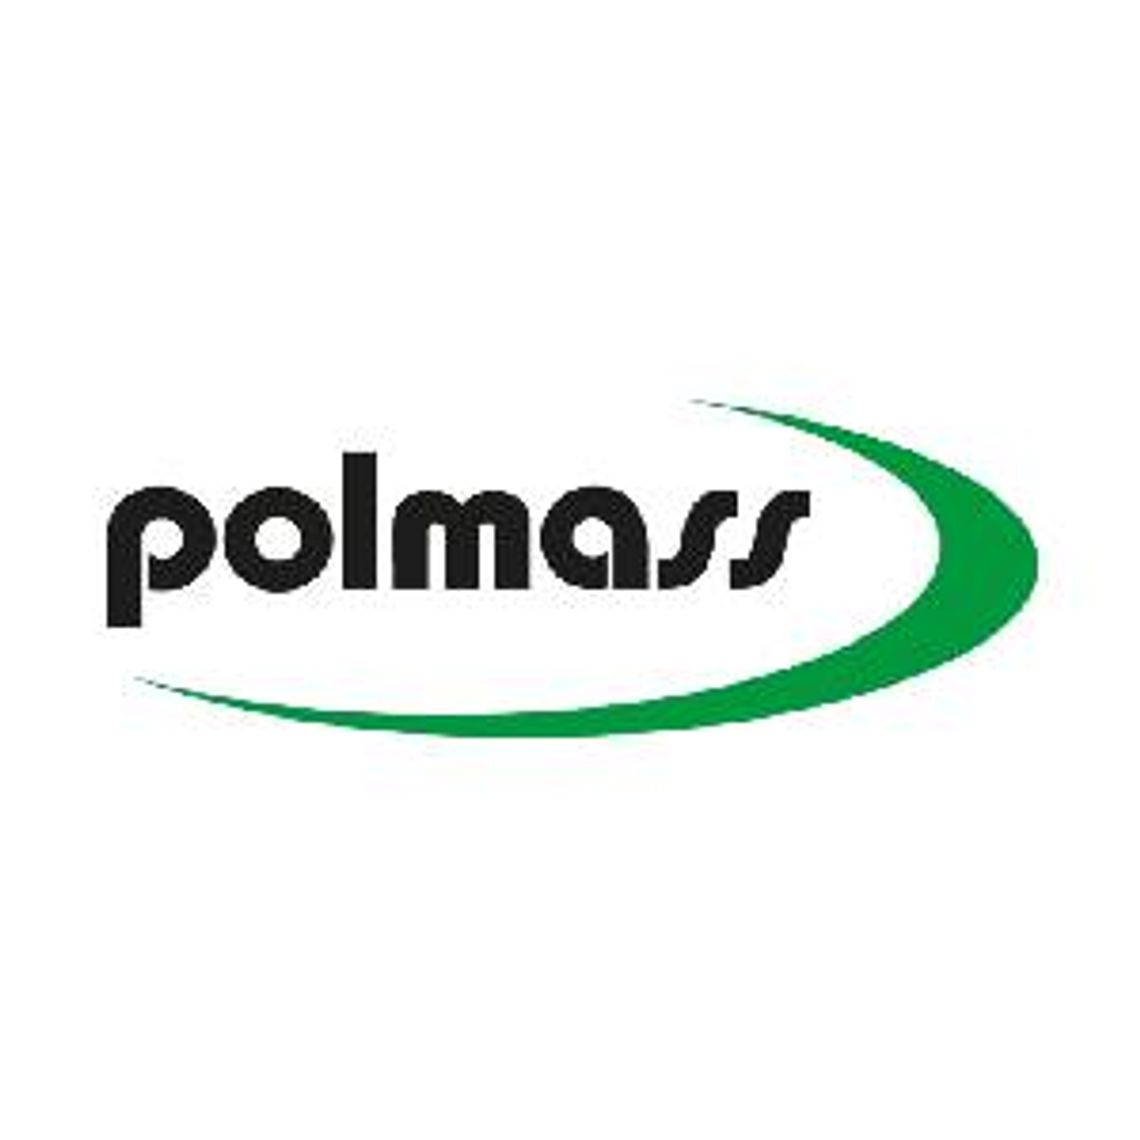 Produkty dla bydła - Polmass S.A.